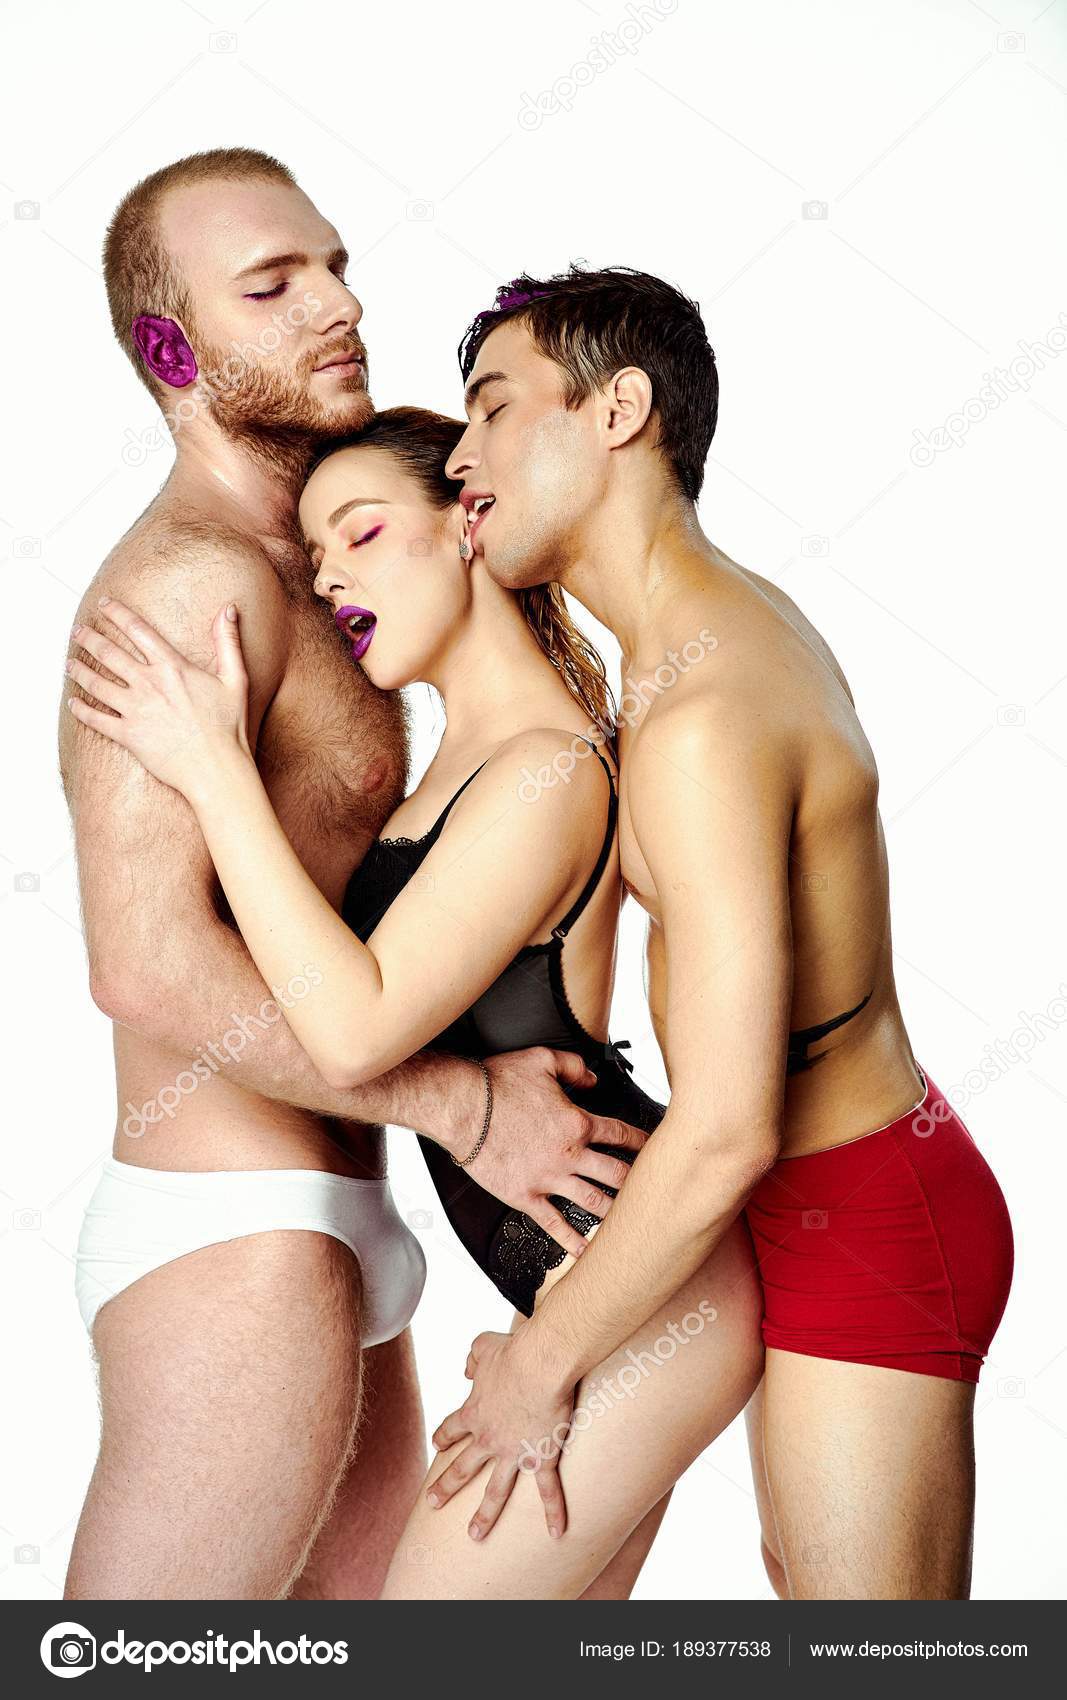 girl guy threesome swinger gallery Porn Photos